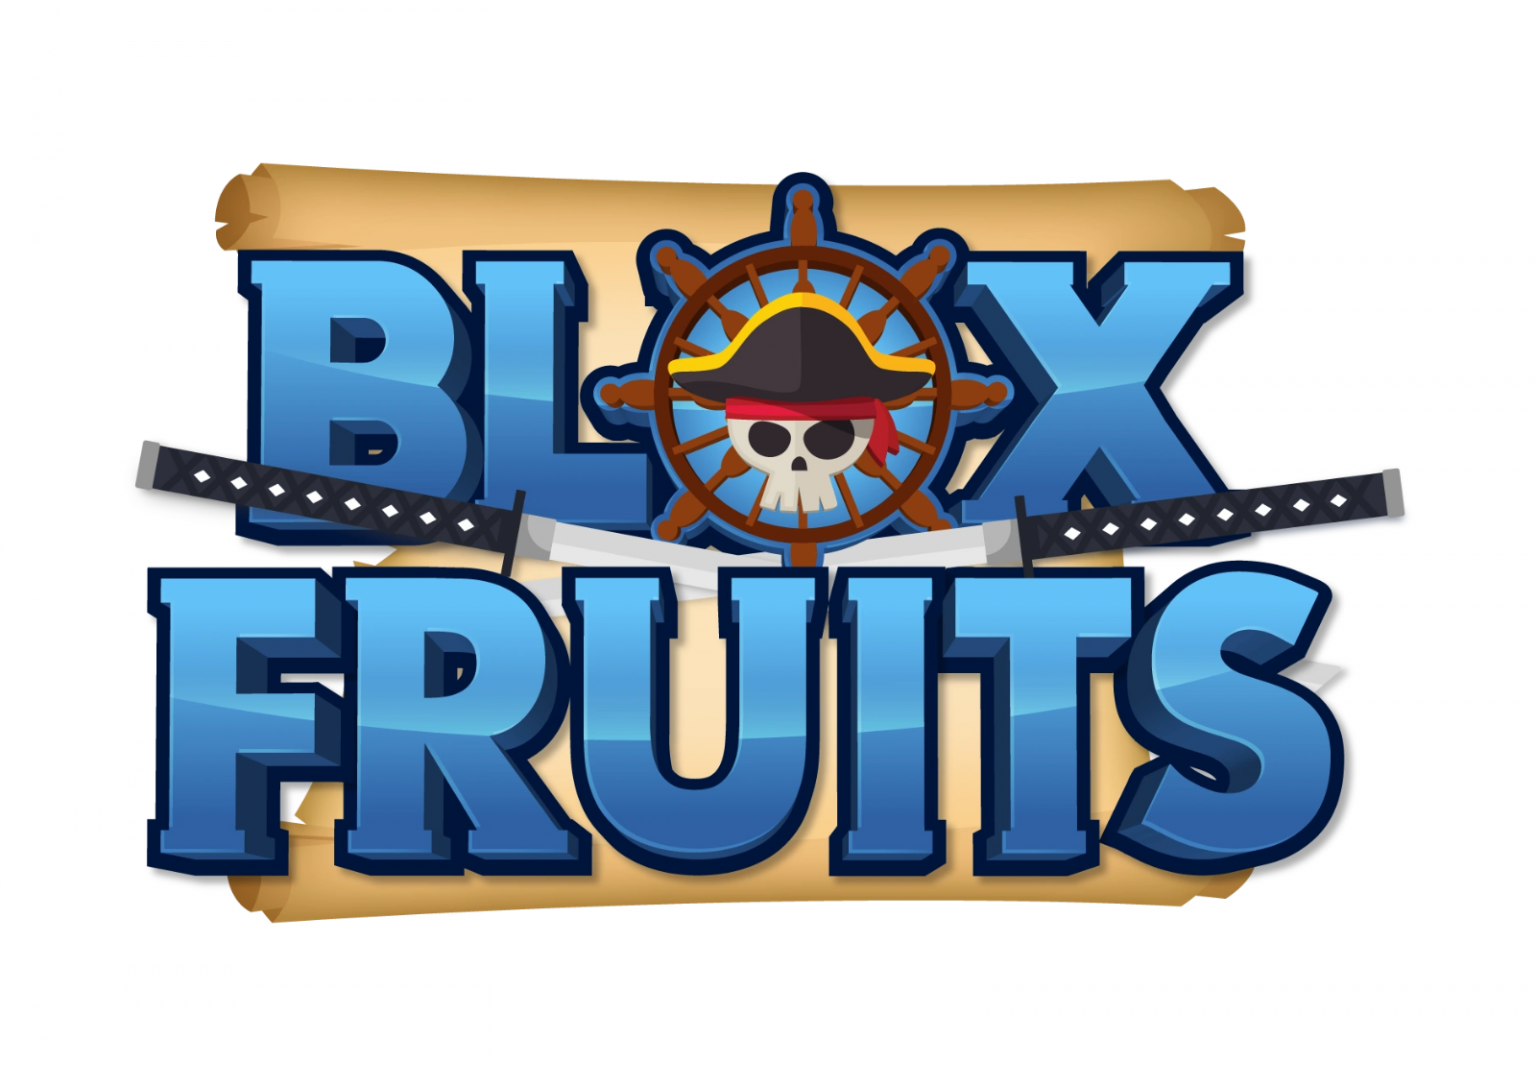 Аватарки блокс фрутс. BLOX Fruits. РОБЛОКС BLOX Fruits. BLOX Fruits фрукты. Логотип Блокс фруит.